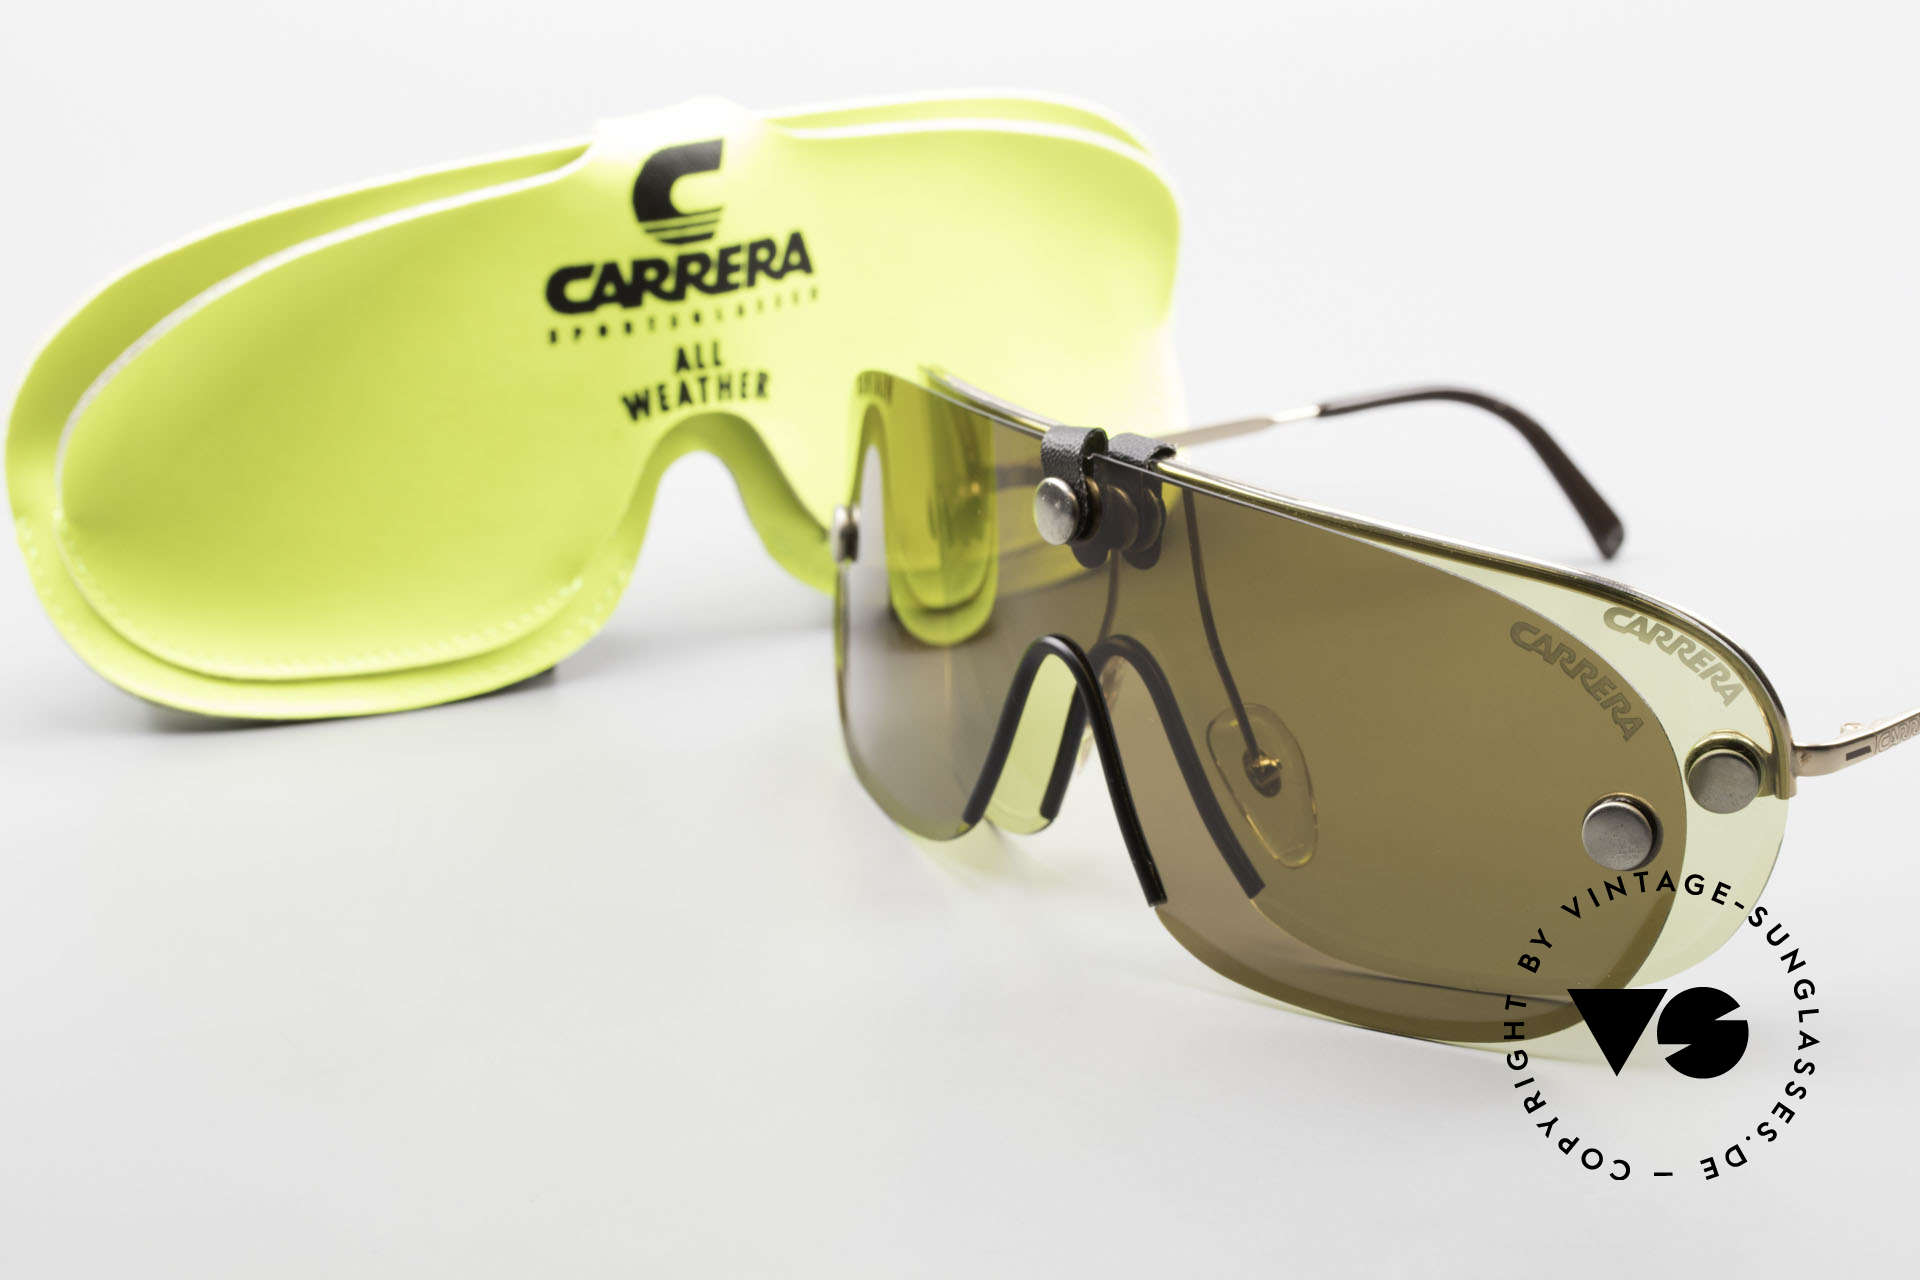 Carrera 5418 All Weather Sunglasses Polar